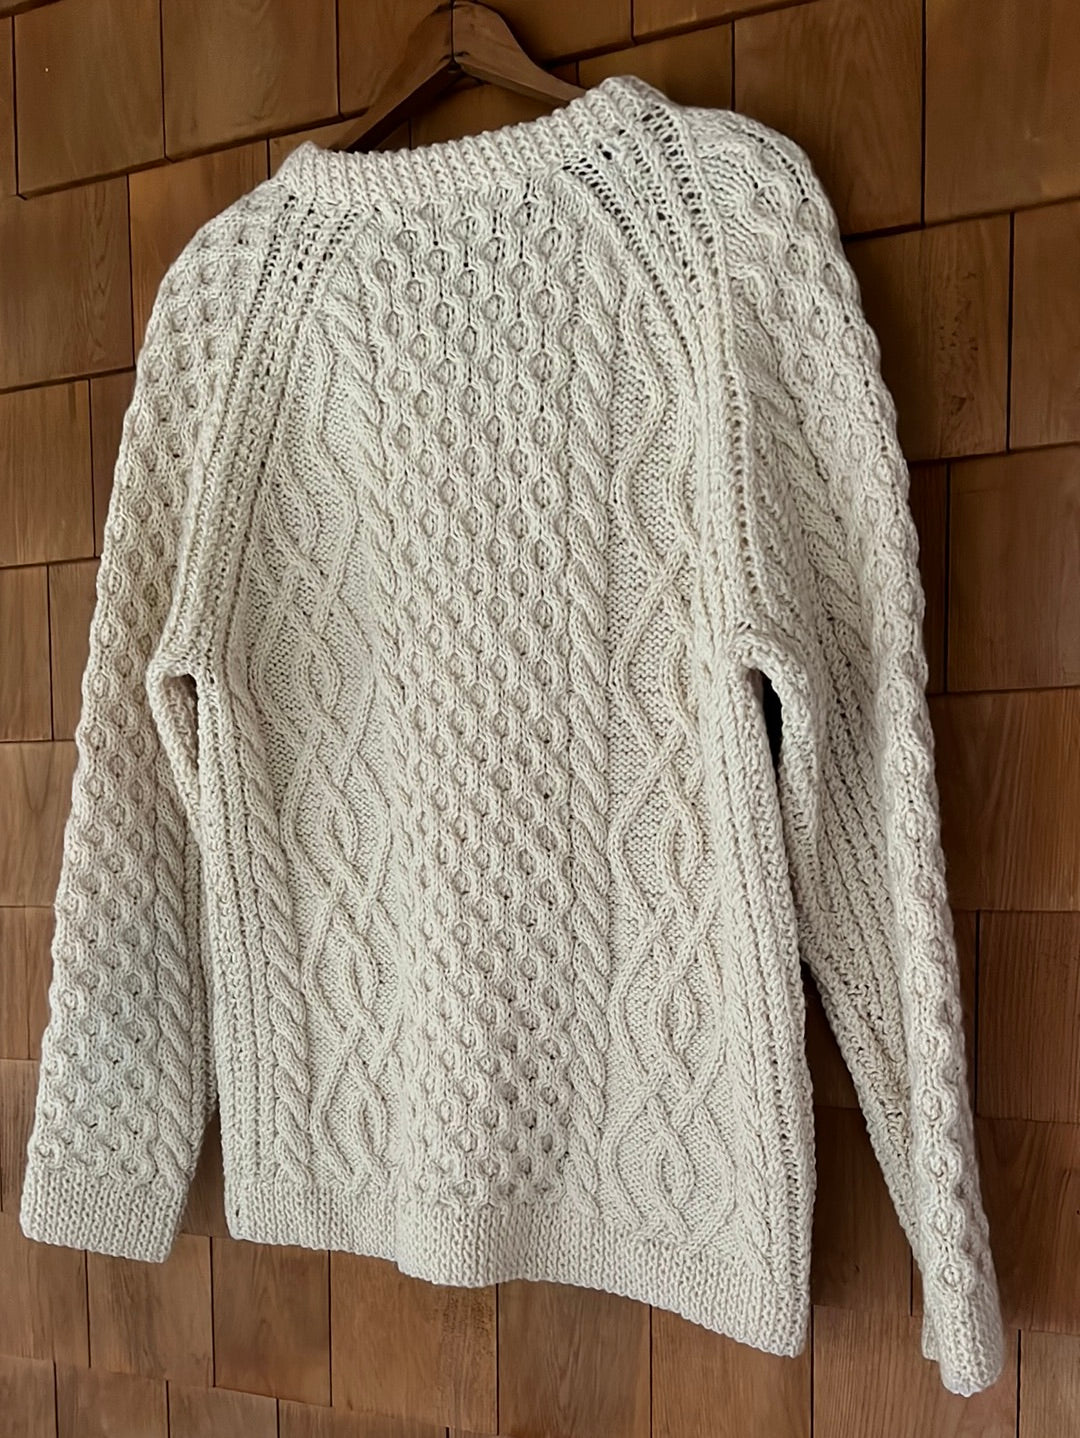 Vintage Irish Cottage Cardigan Sweater